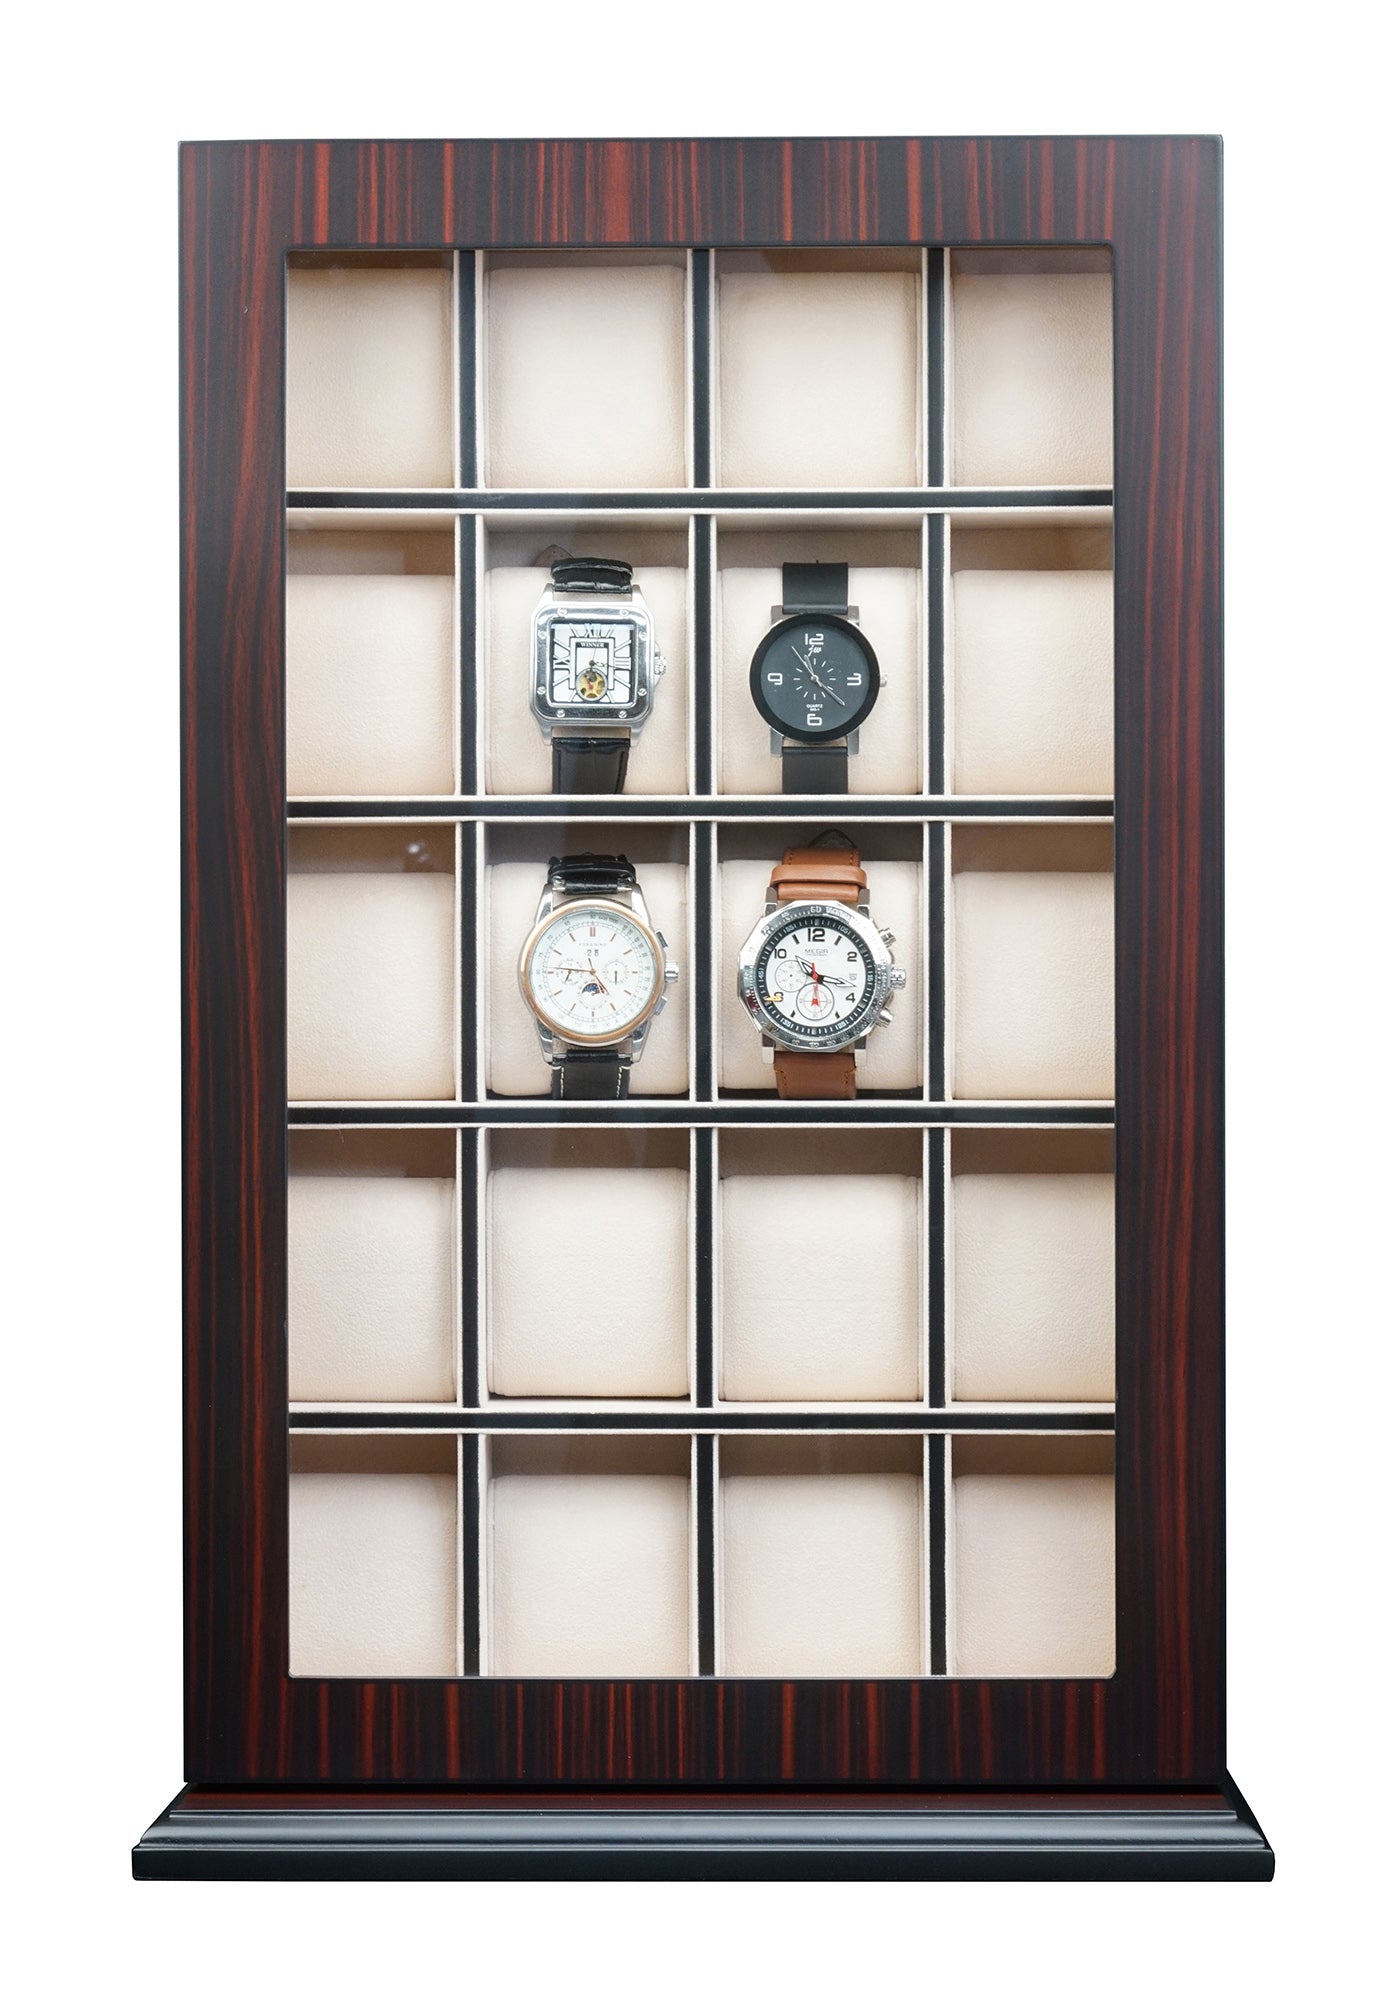 Hand Made Watch Jewelry Display Storage Holder Case Glass Box Organizer Gift 68b